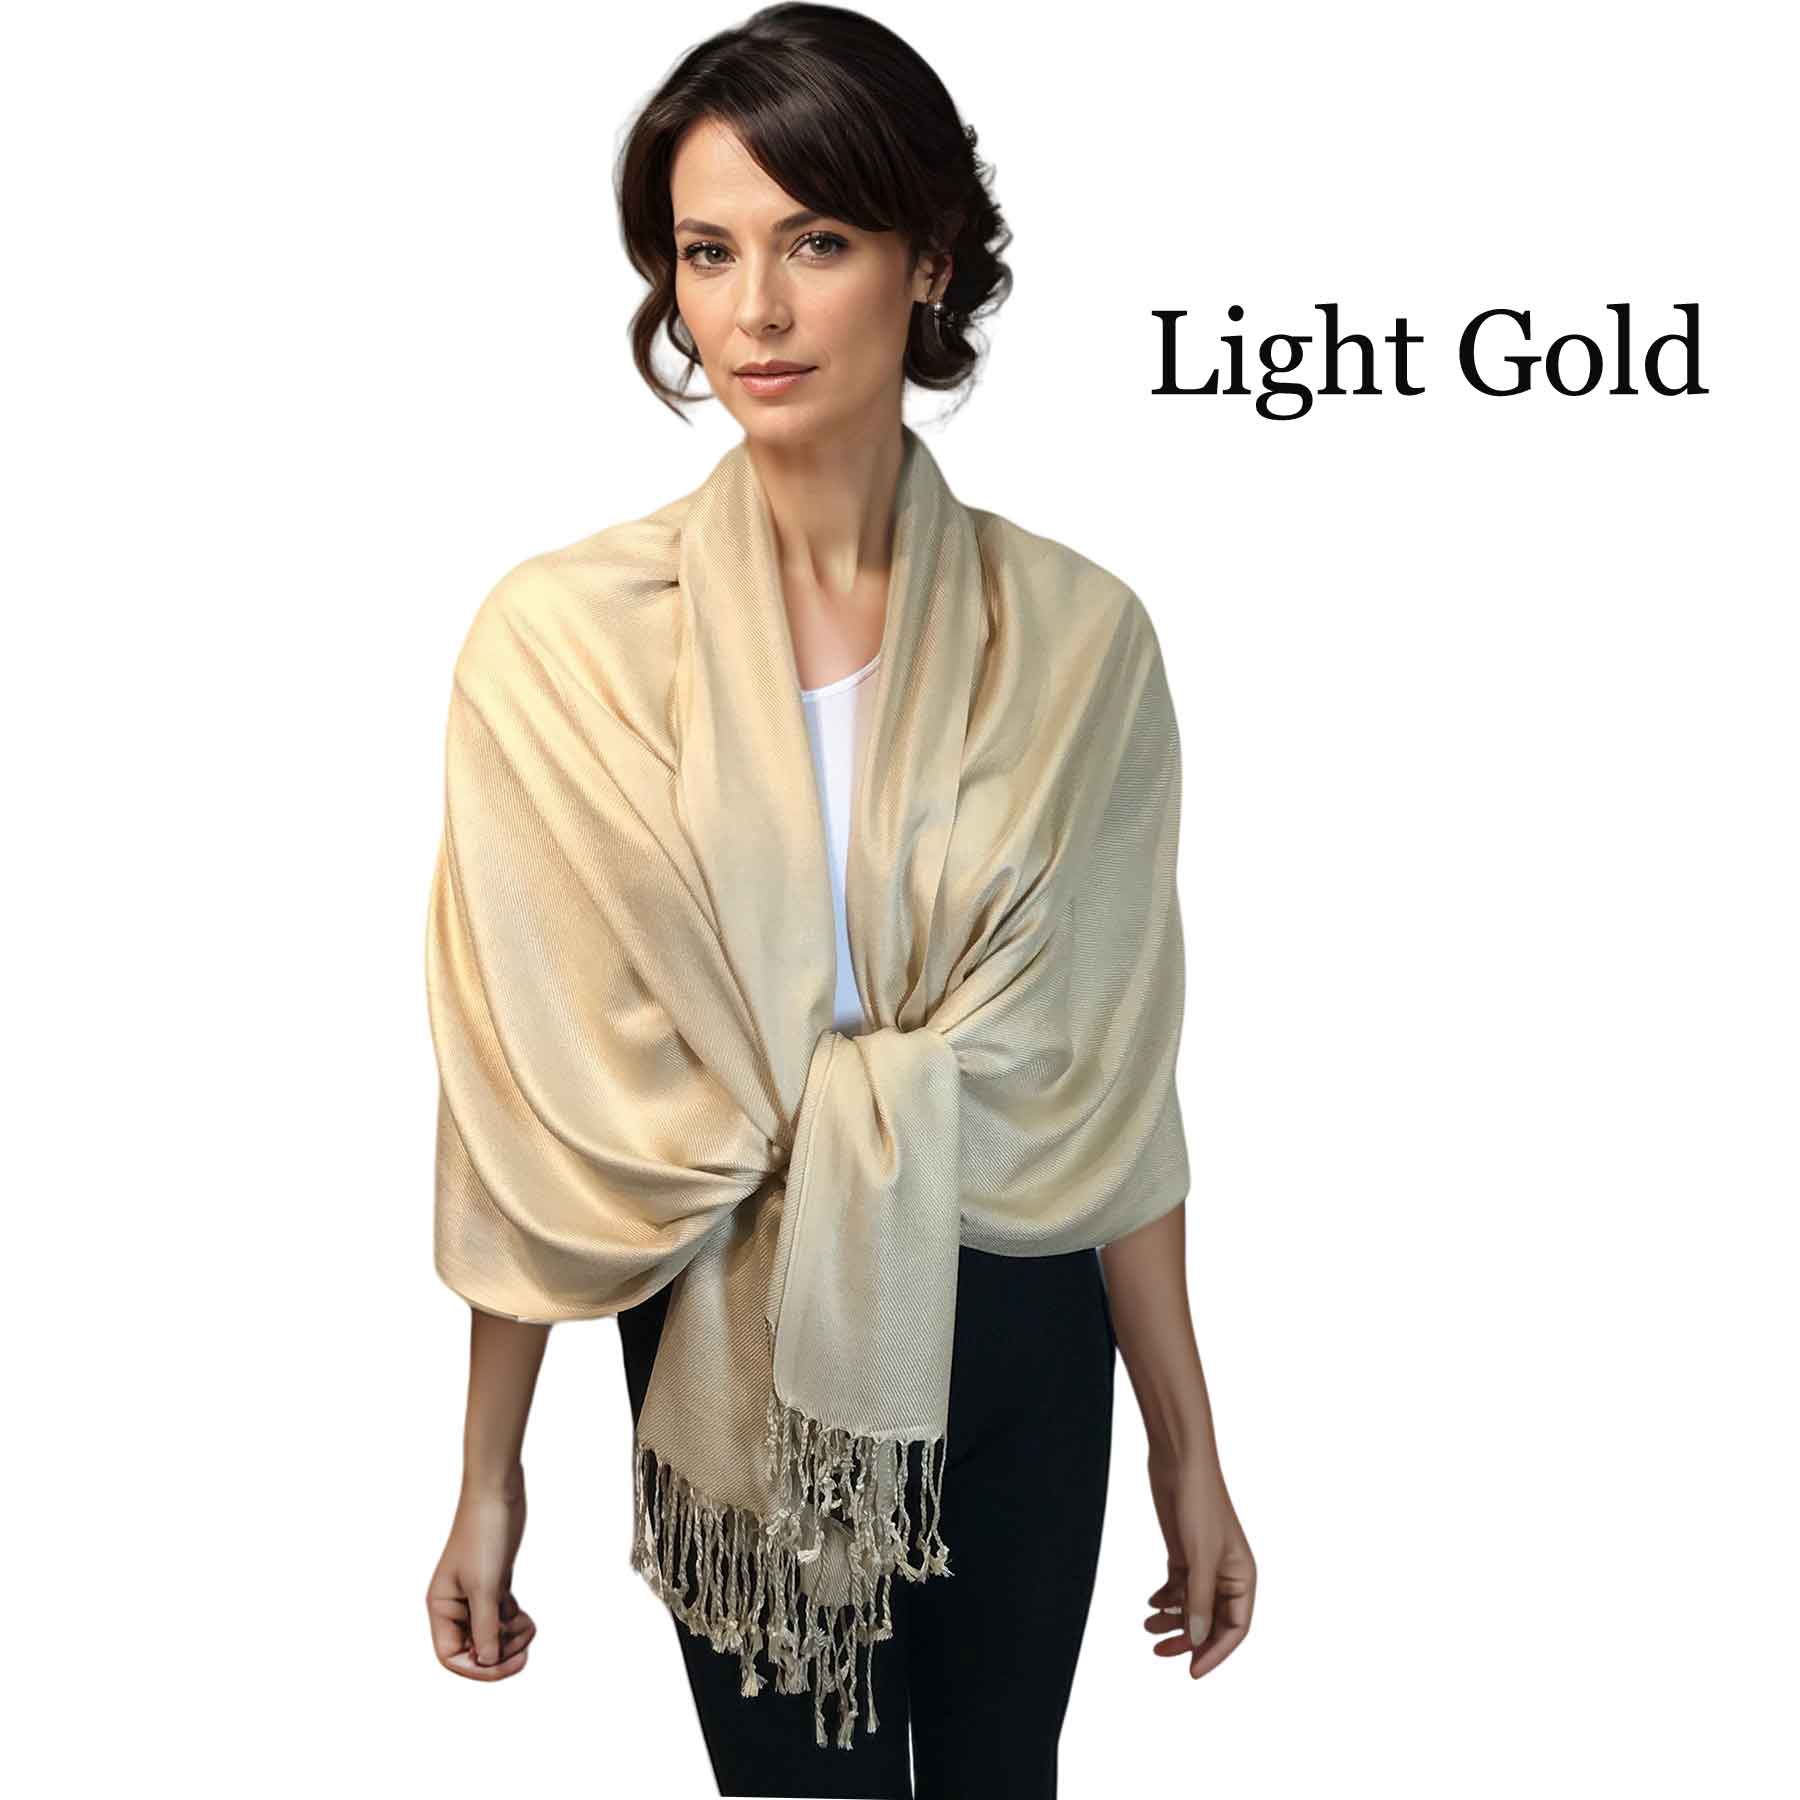 Light Gold #04<br>
Pashmina Style Shawl